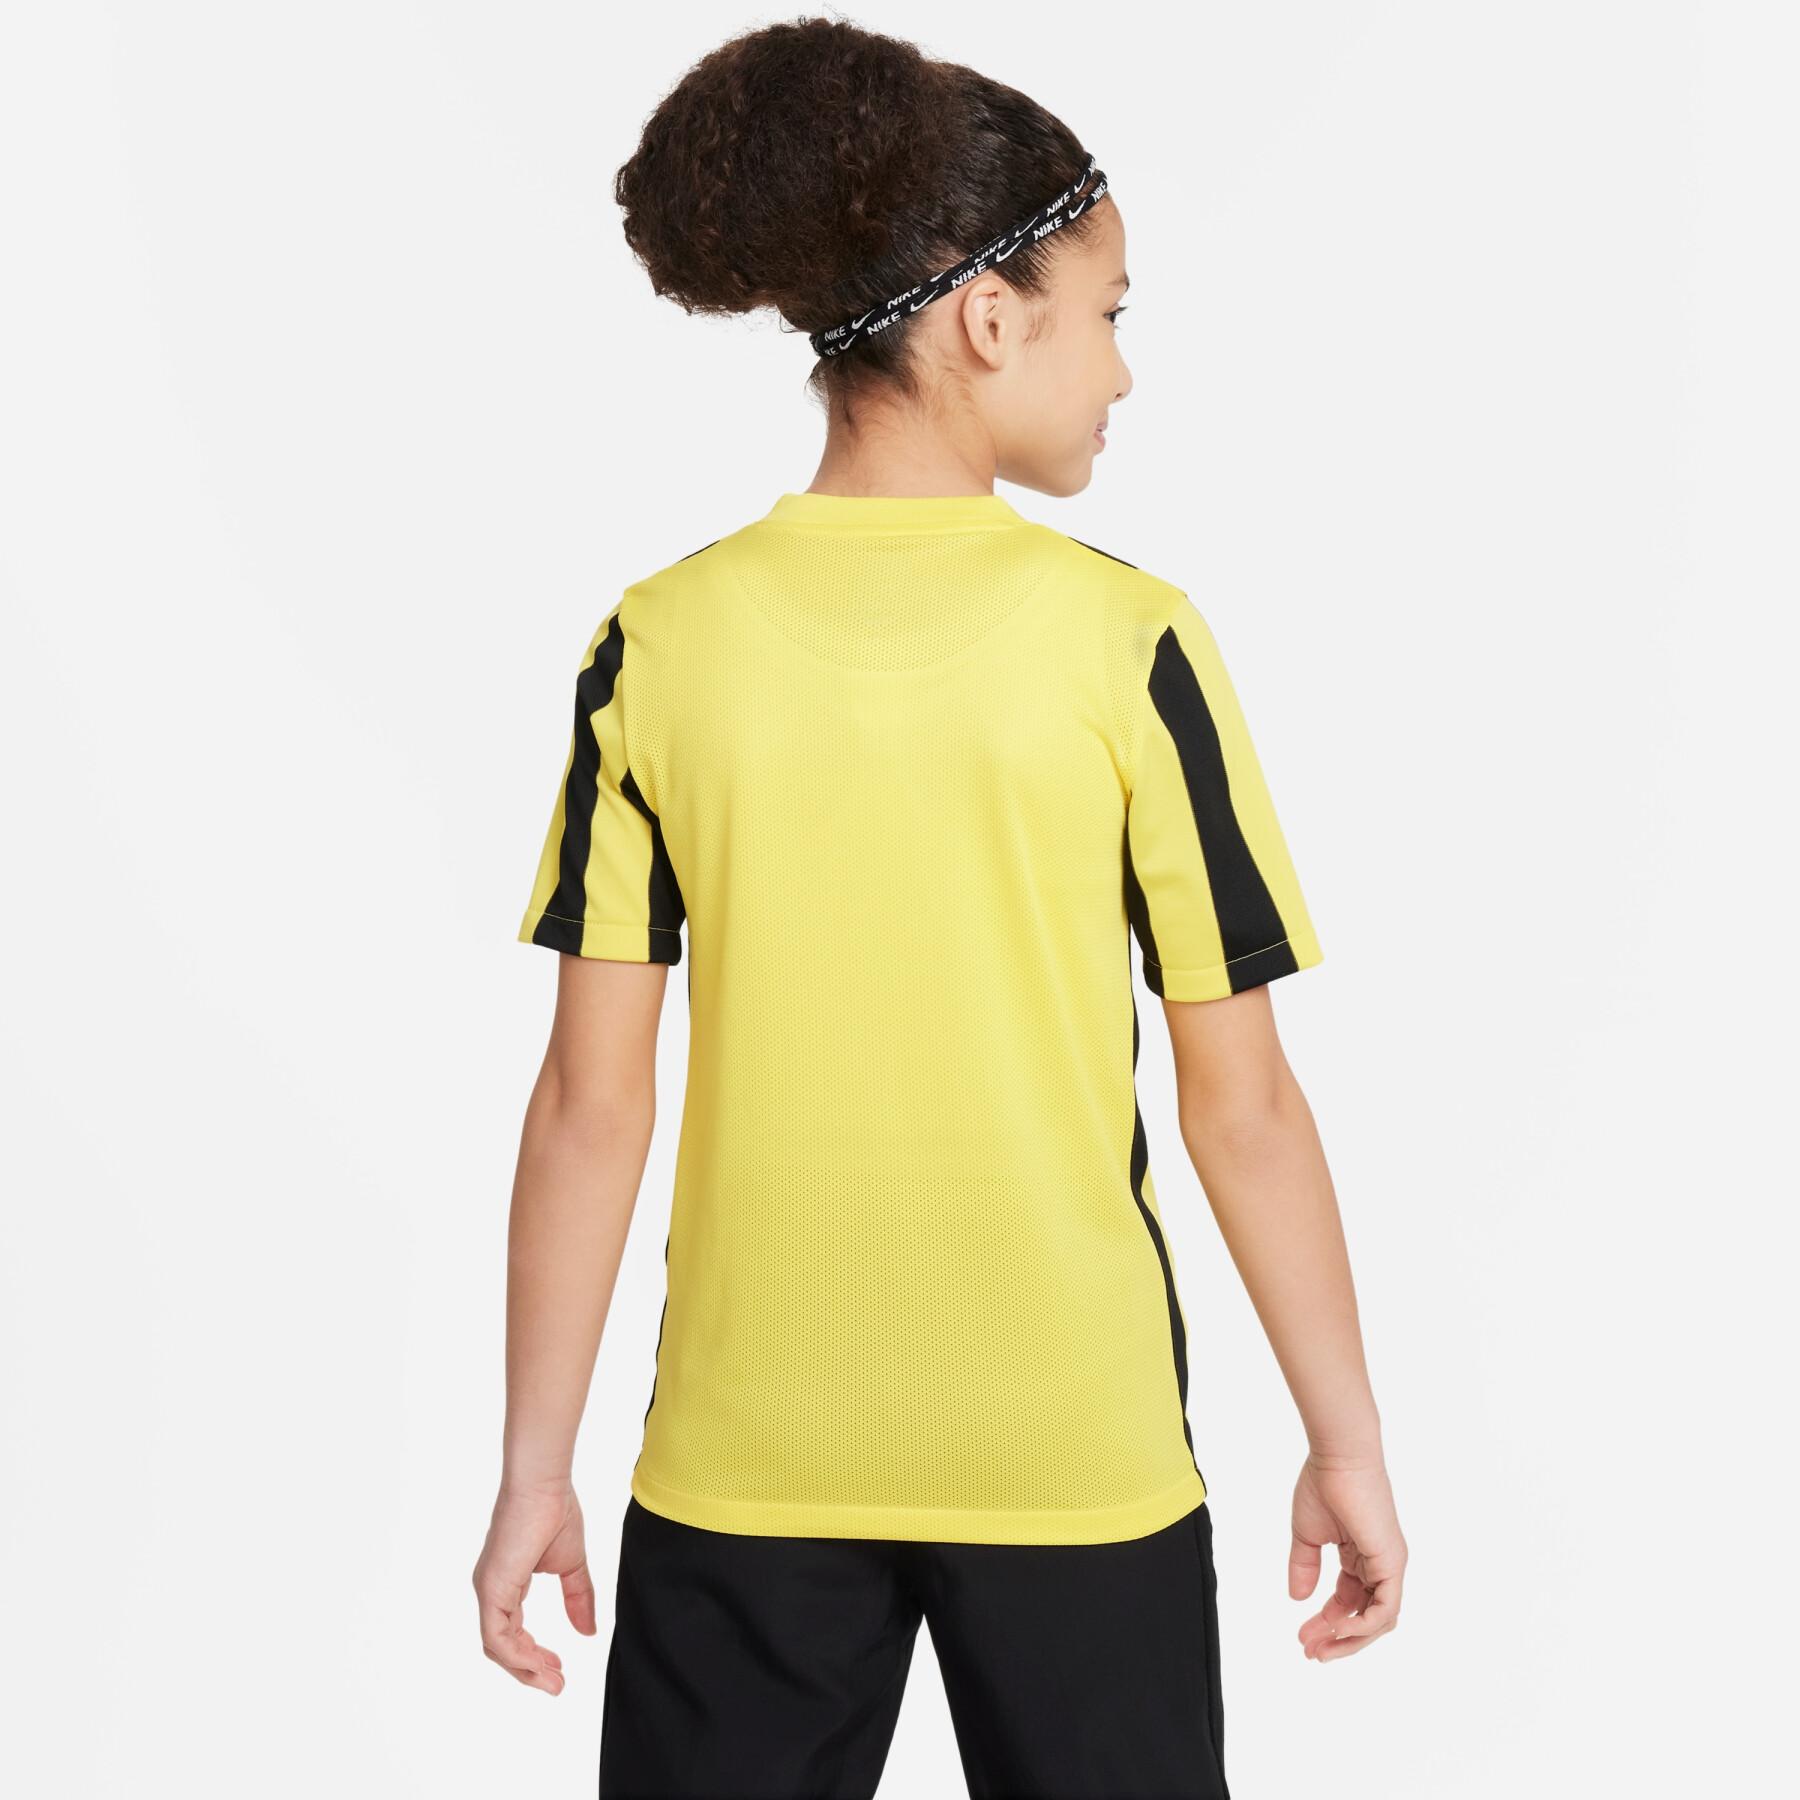 Children's jersey Nike Dynamic Fit